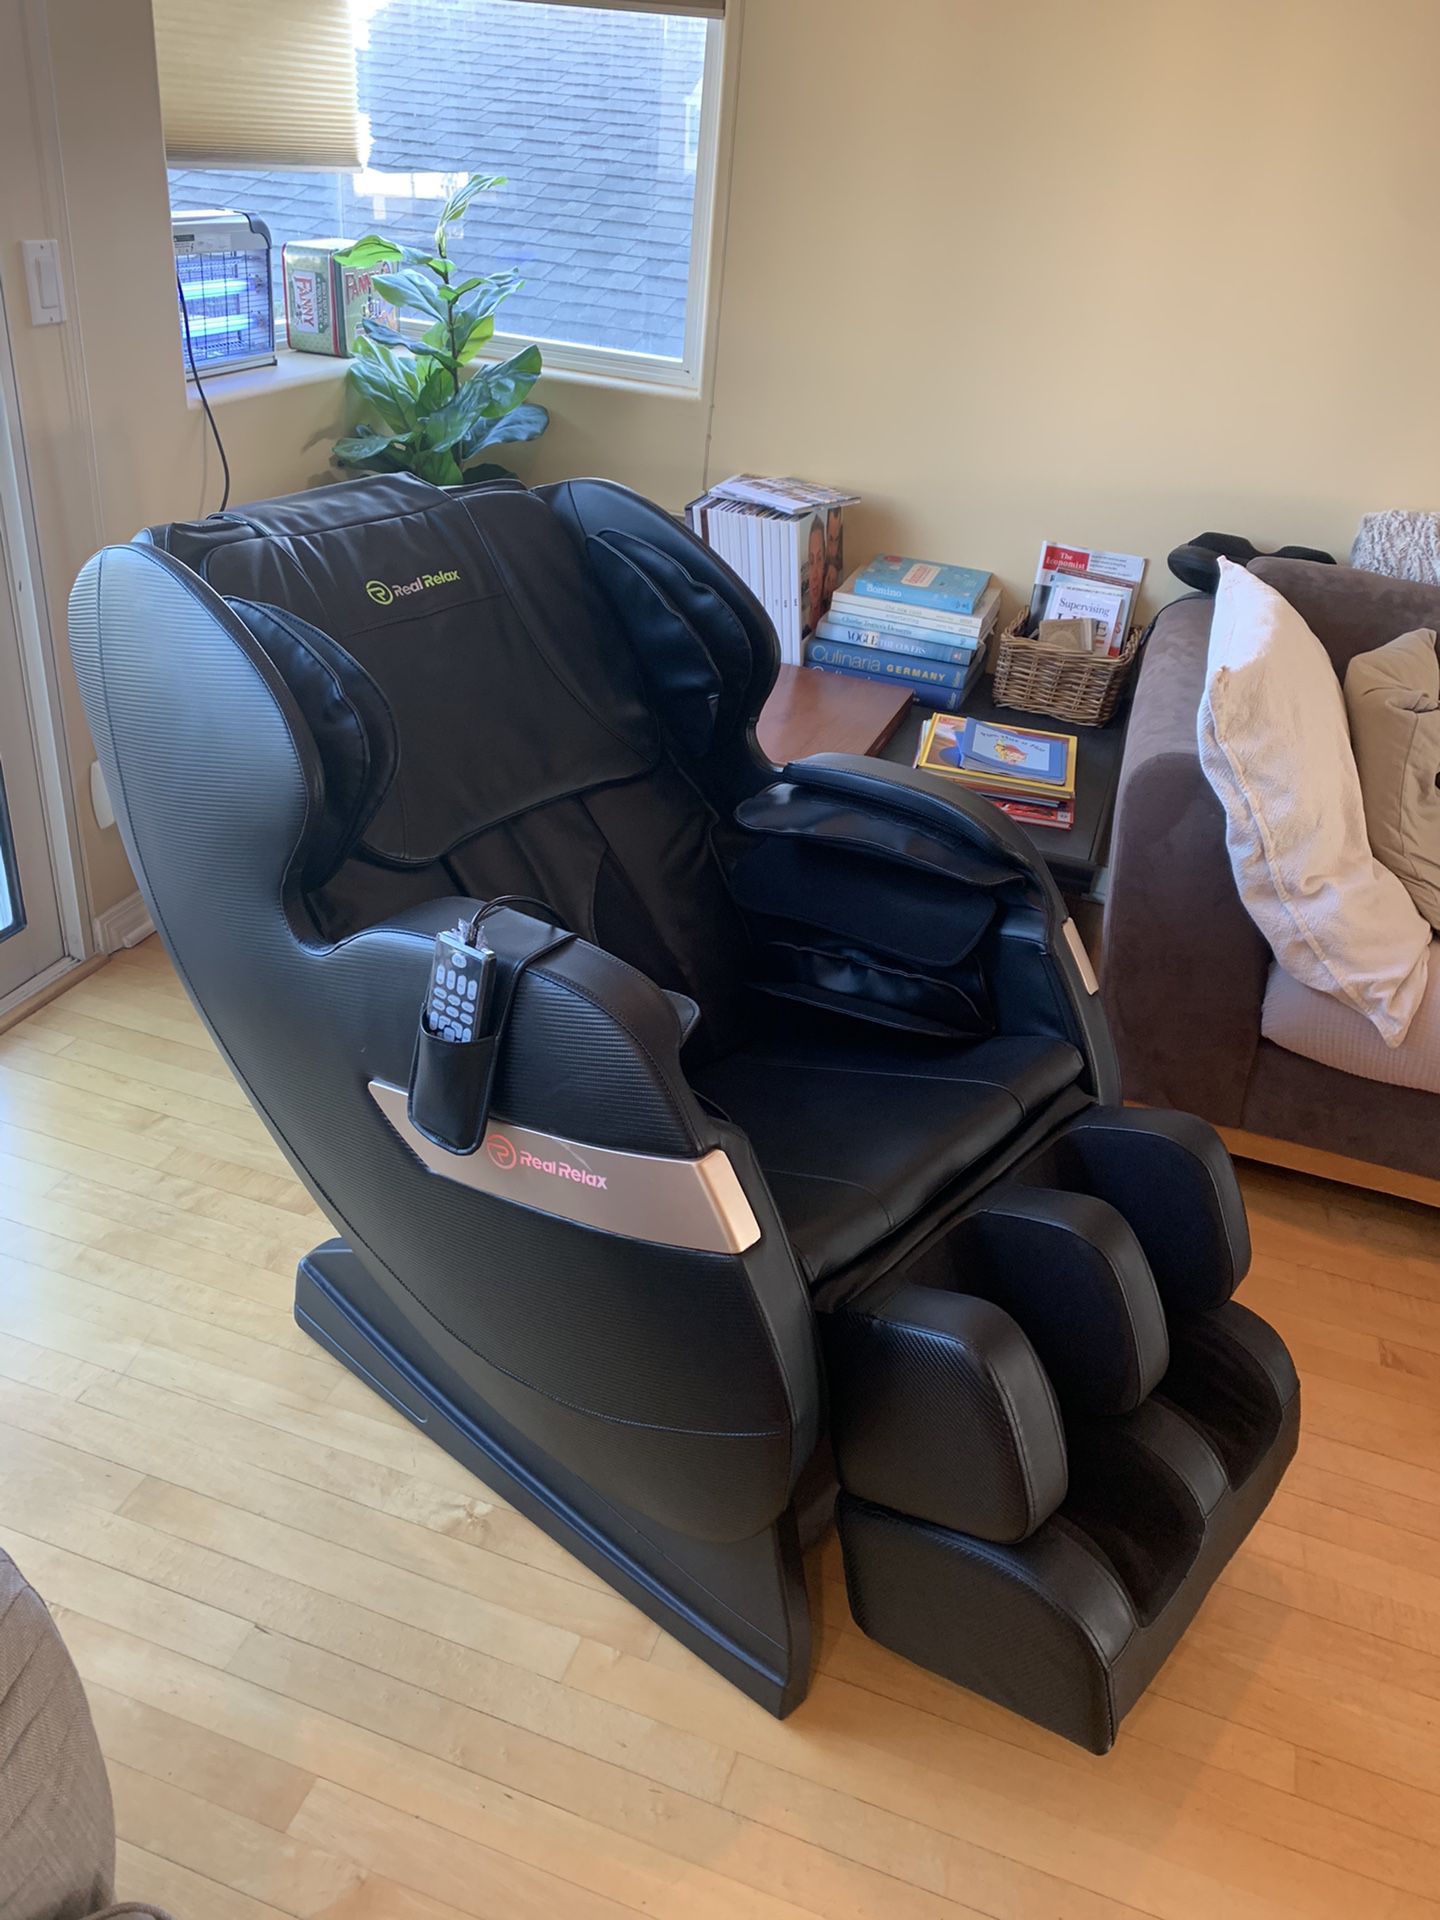 Massage Chair - Like new